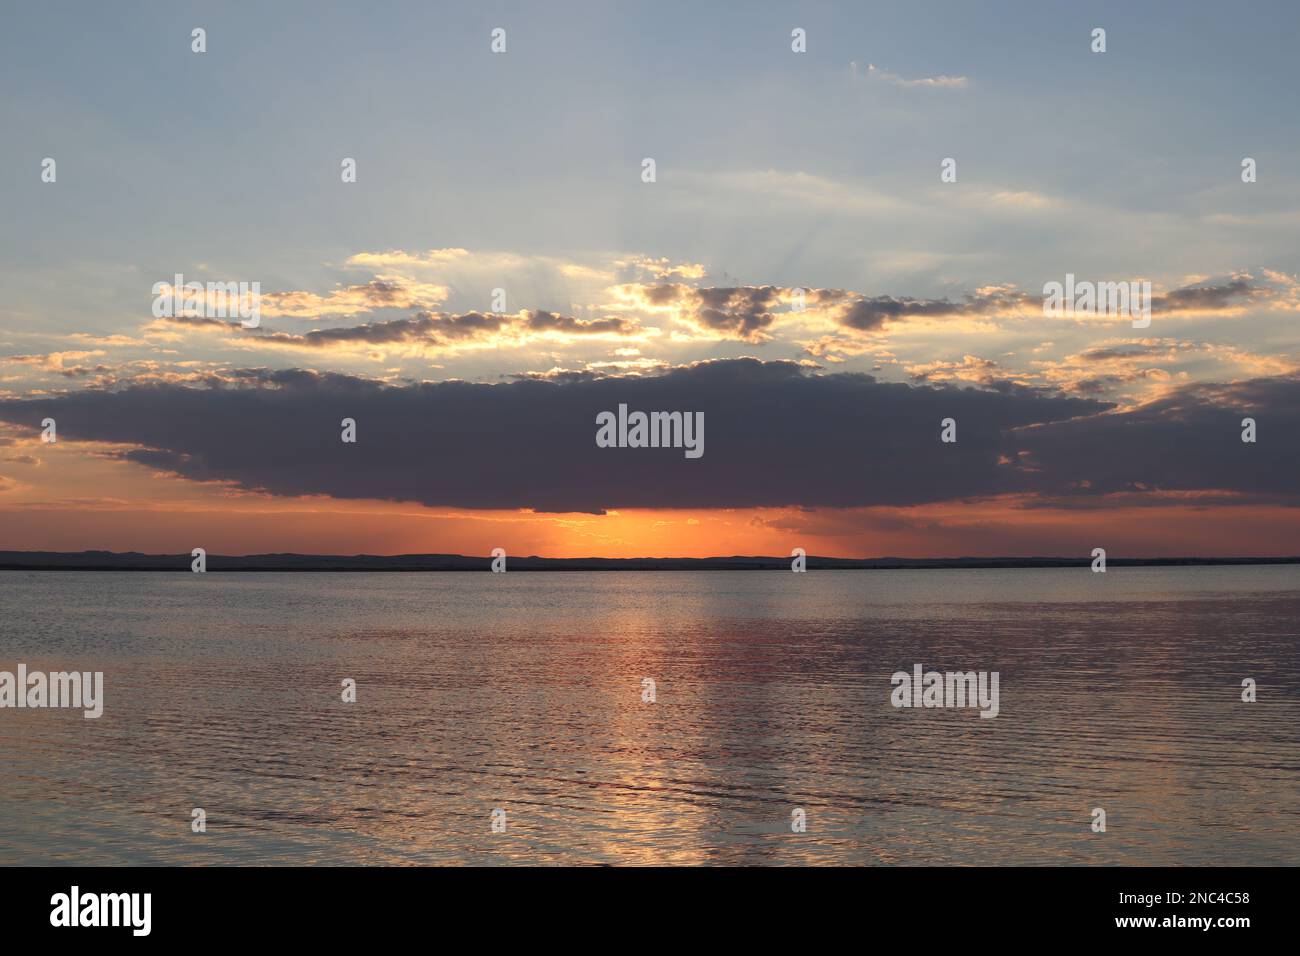 Sunset in siwa oasis Stock Photo - Alamy